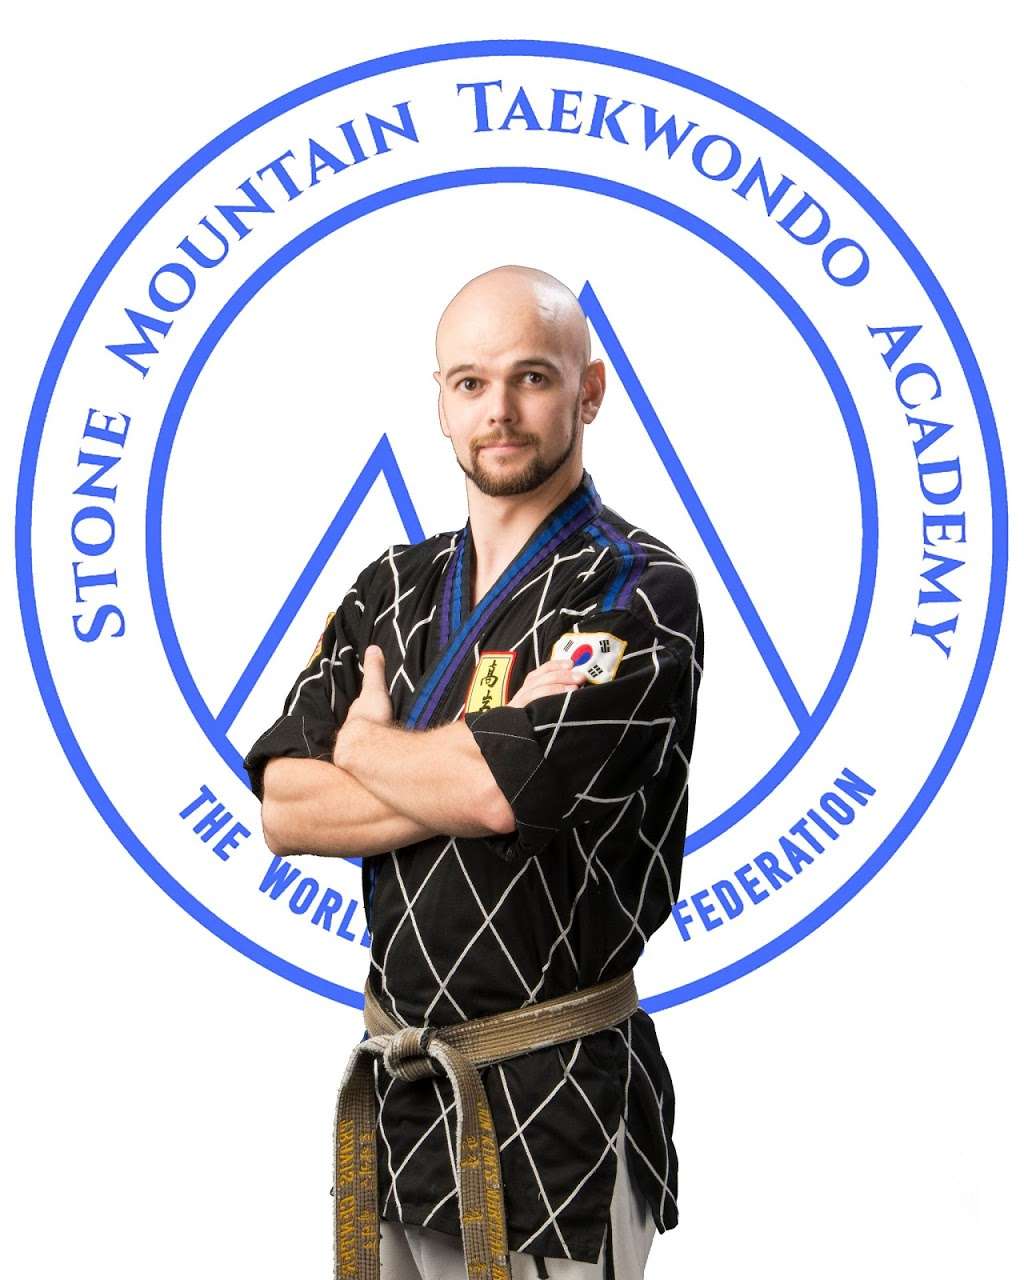 Stone Mountain Taekwondo Academy | 10024 W Oakland Park Blvd, Sunrise, FL 33351, USA | Phone: (954) 741-8000